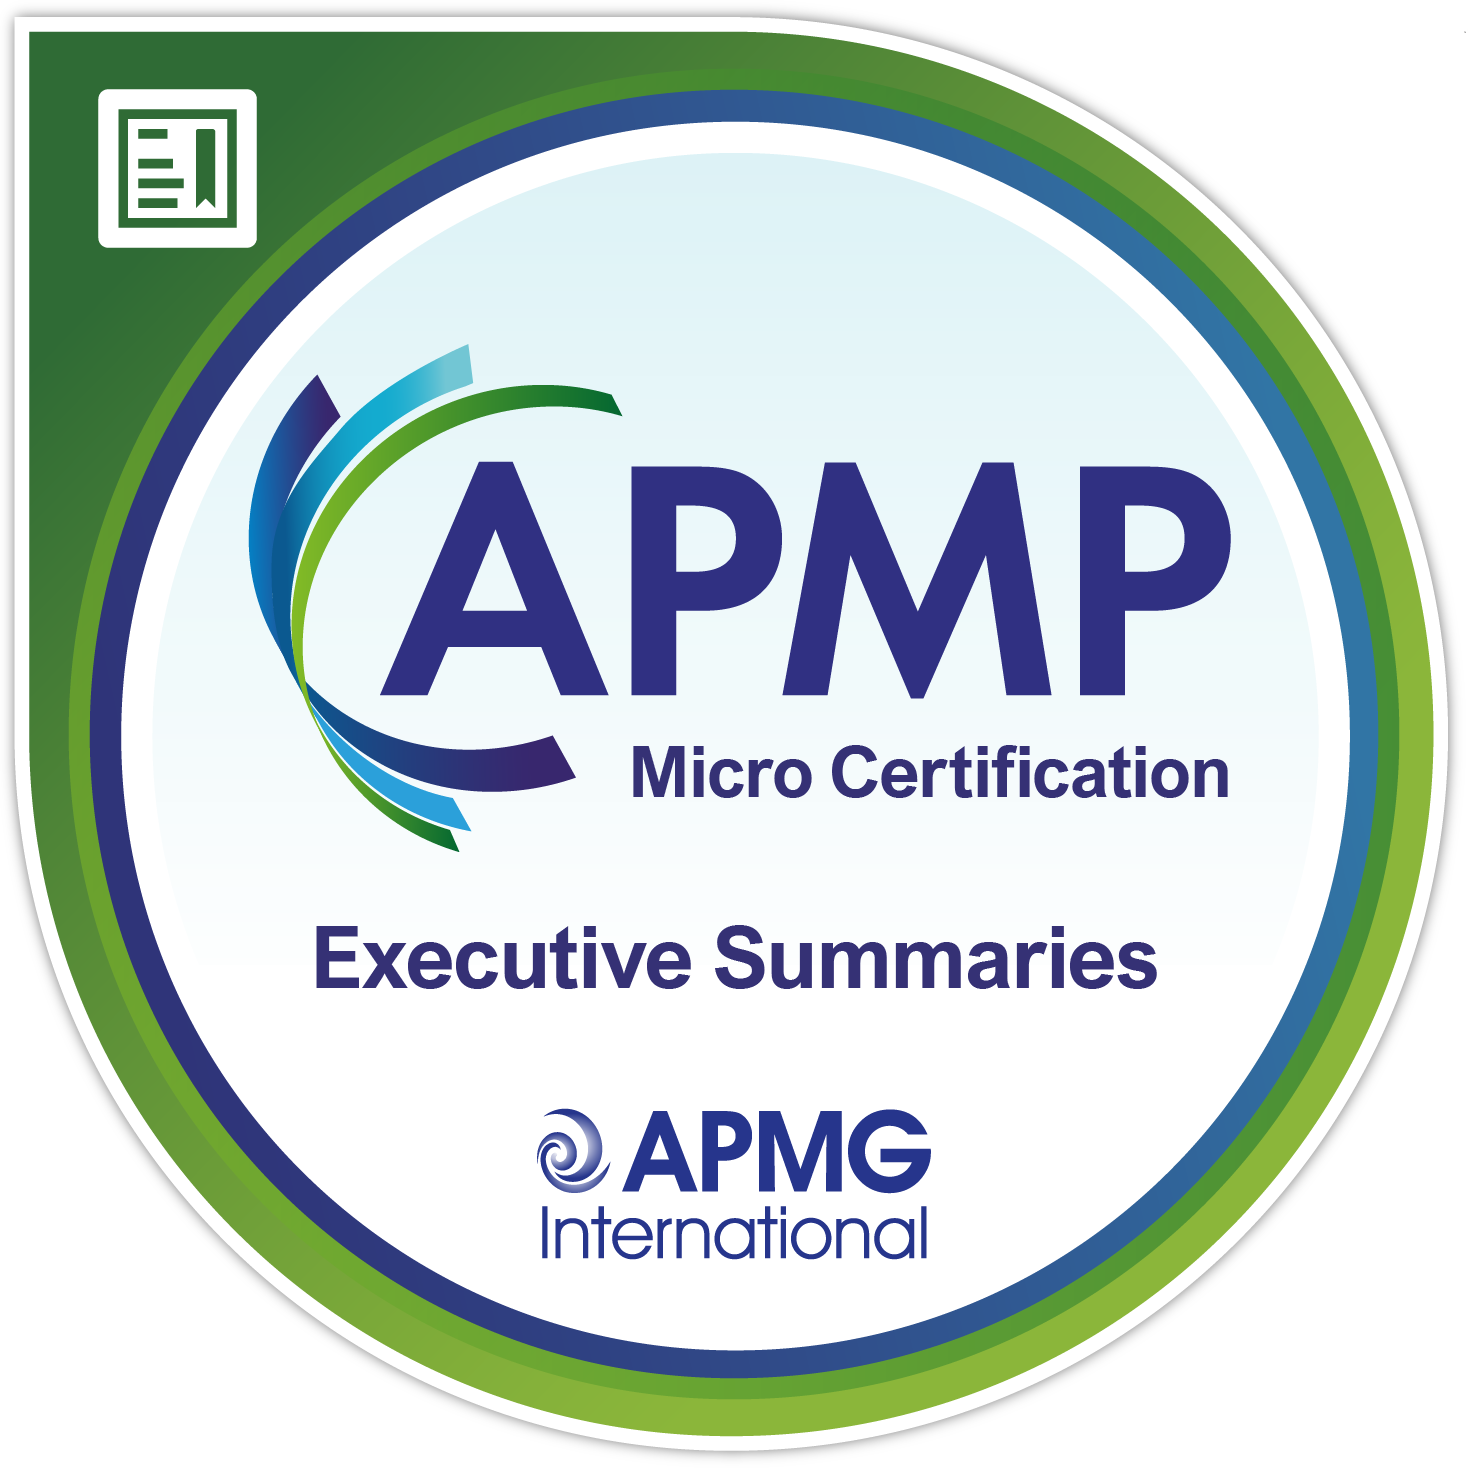 apmp micro certification executive summaries